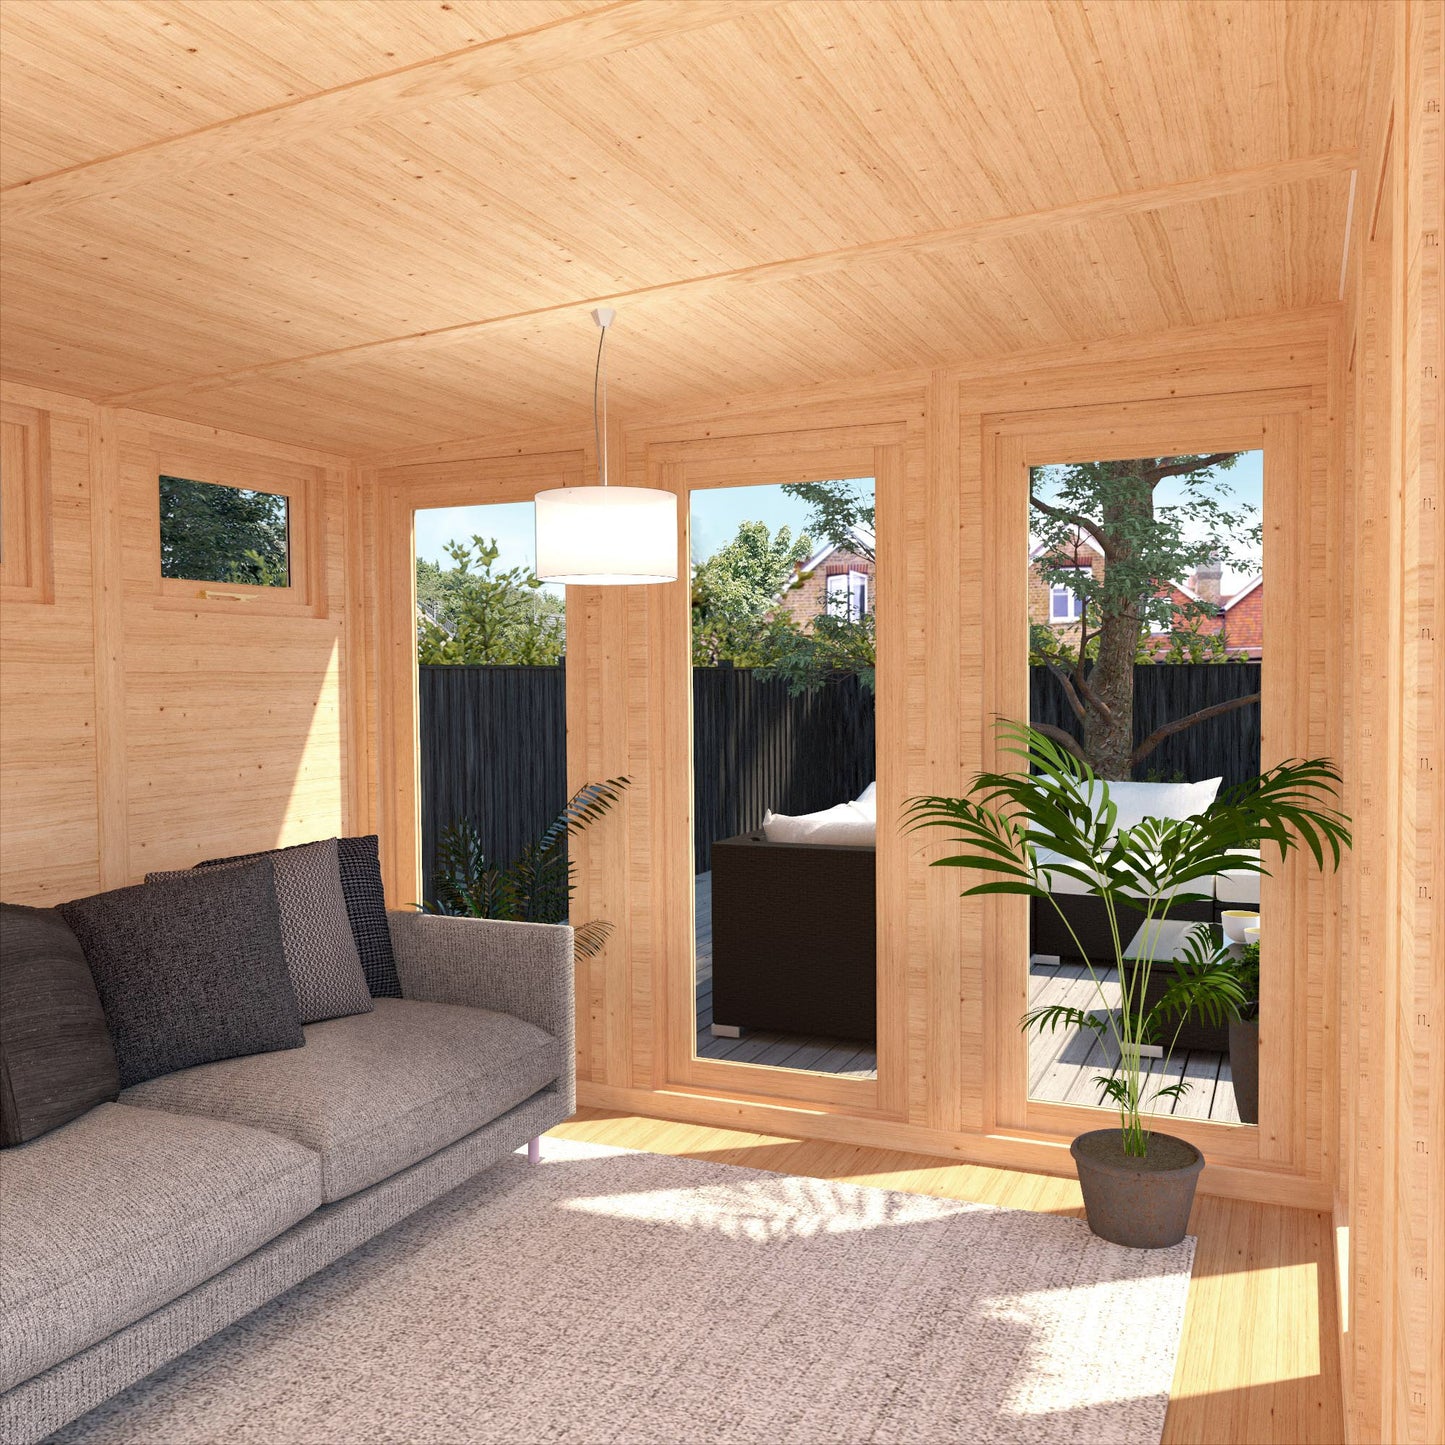 The Edwinstowe 6m x 3m Premium Insulated Garden Room